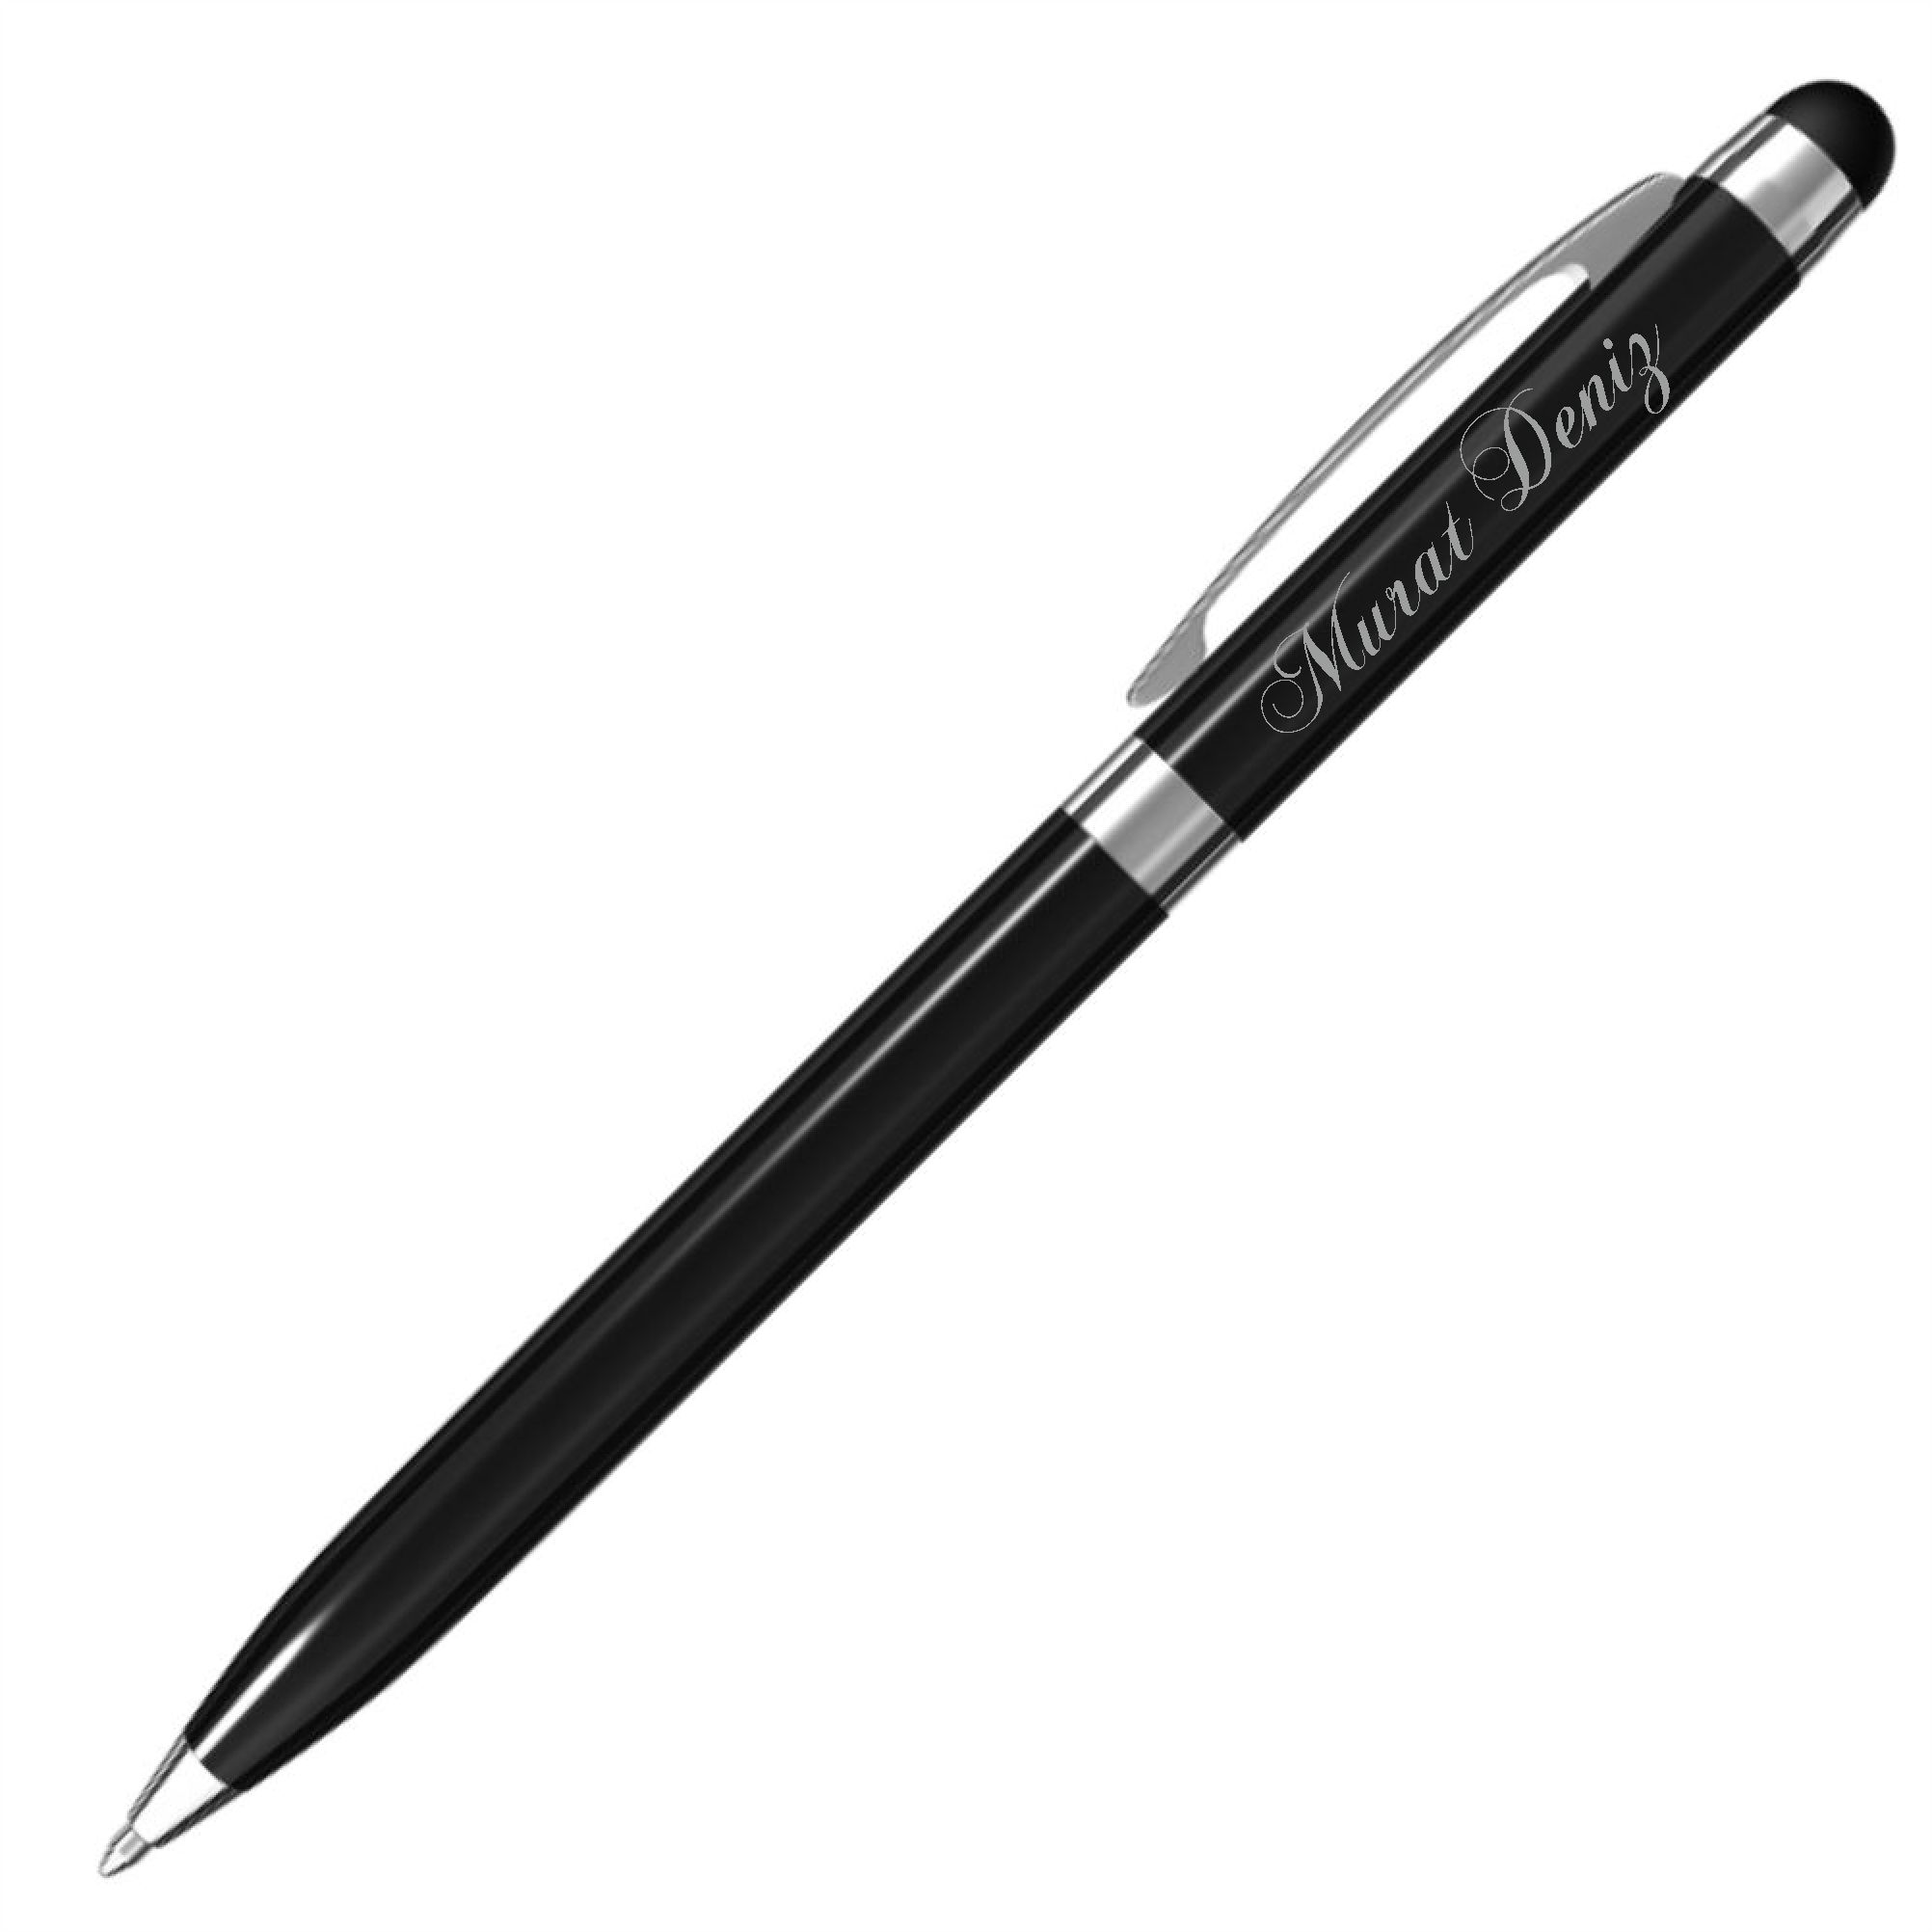 İsim Yazılı Scrikss Touch Pen Dokunmatik Tükenmez Kalem